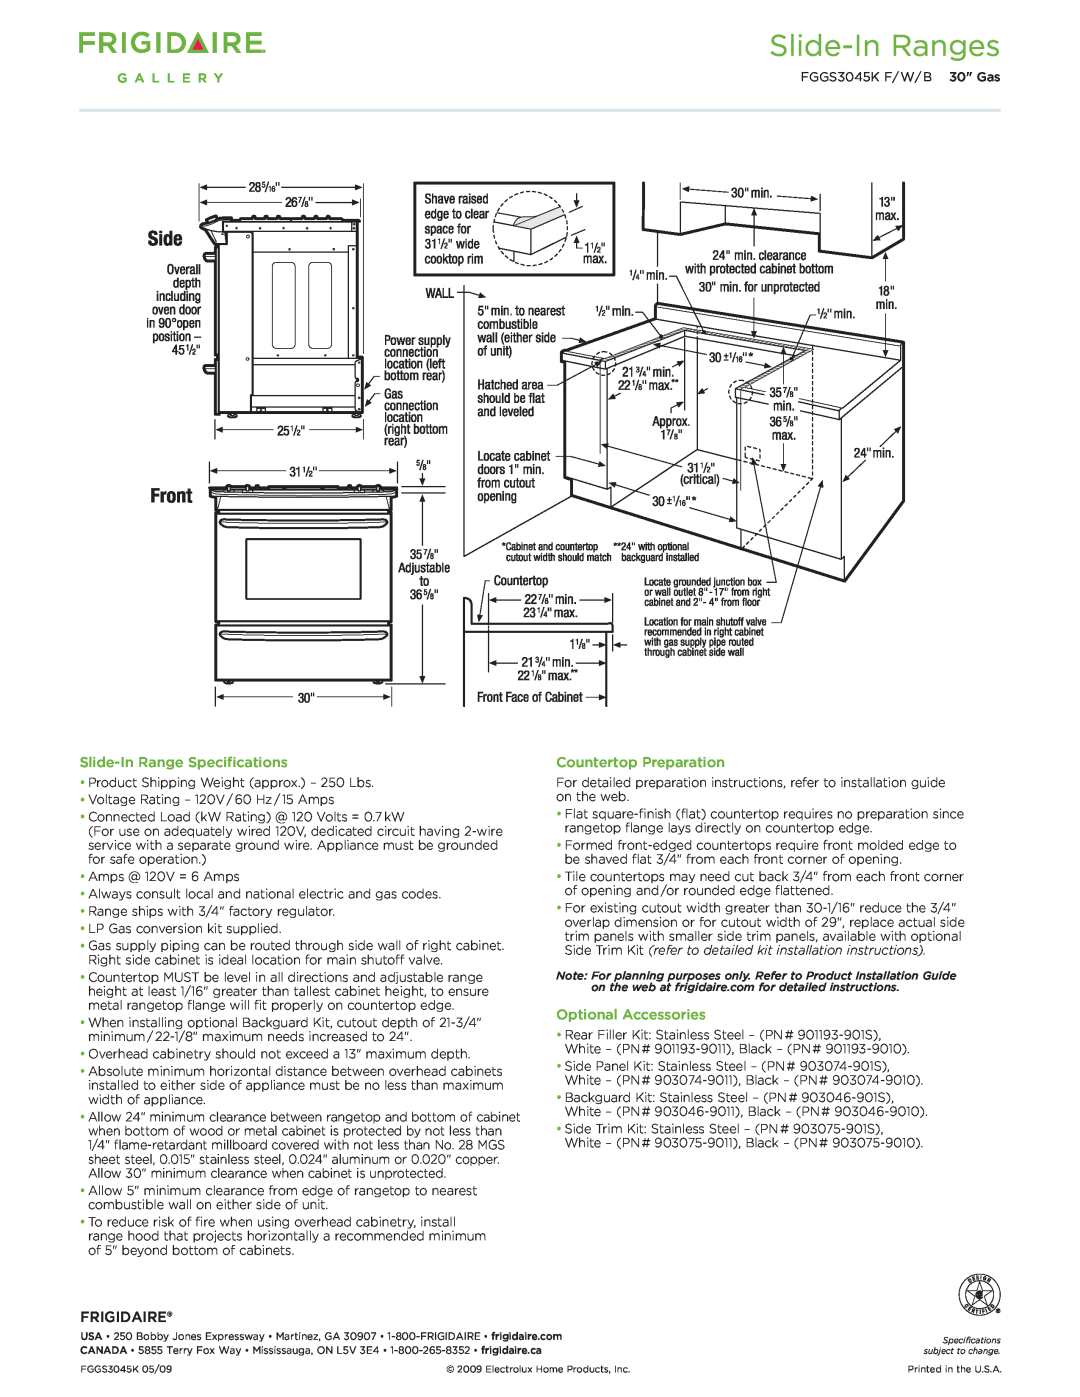 Frigidaire FGGS3045K dimensions Slide-InRange Specifications, Countertop Preparation, Frigidaire, Optional Accessories 